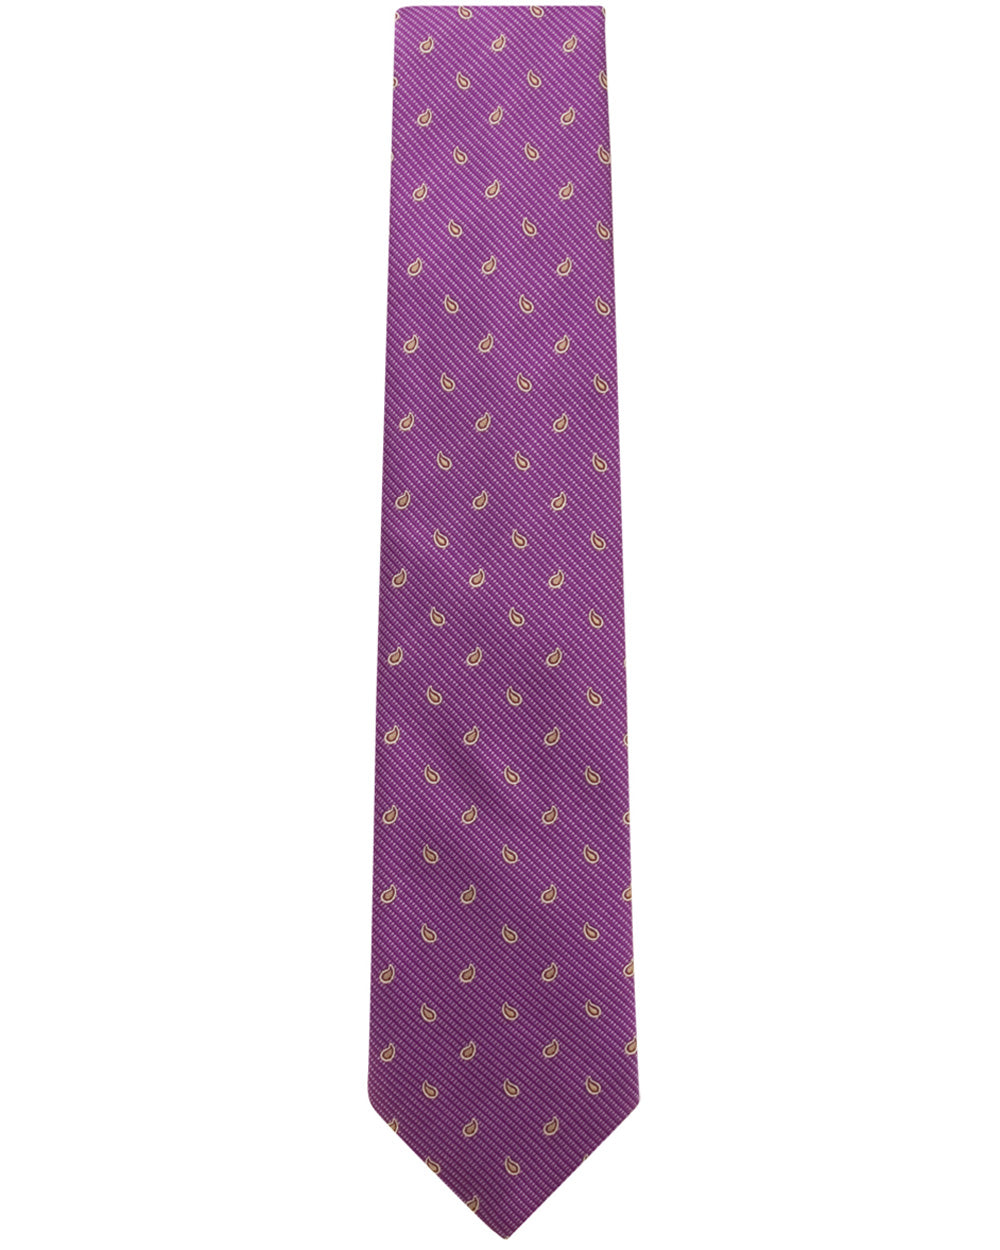 Purple and Beige Paisley Silk Tie